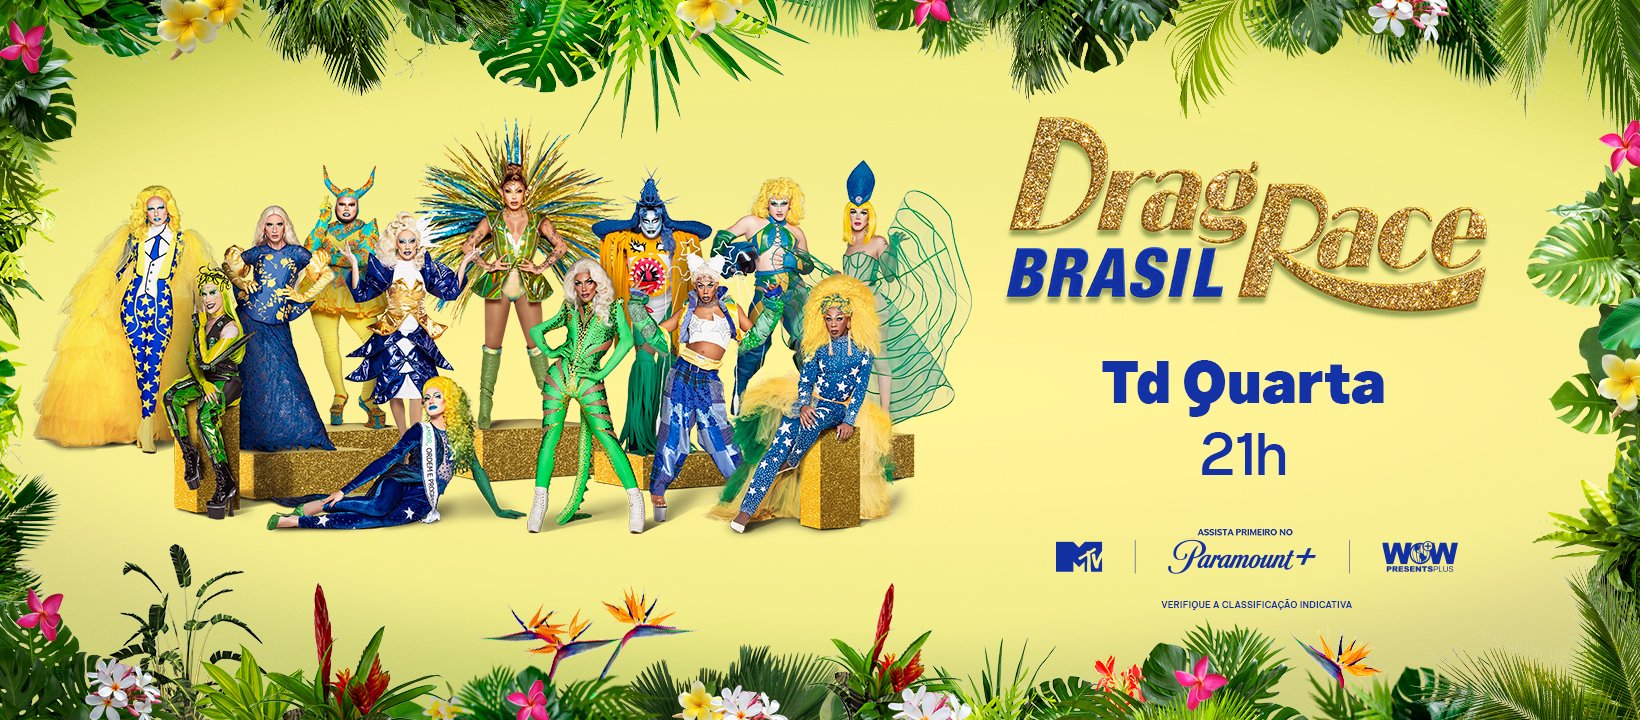 Drag Race Brasil, PRIMEIRO EPISÓDIO